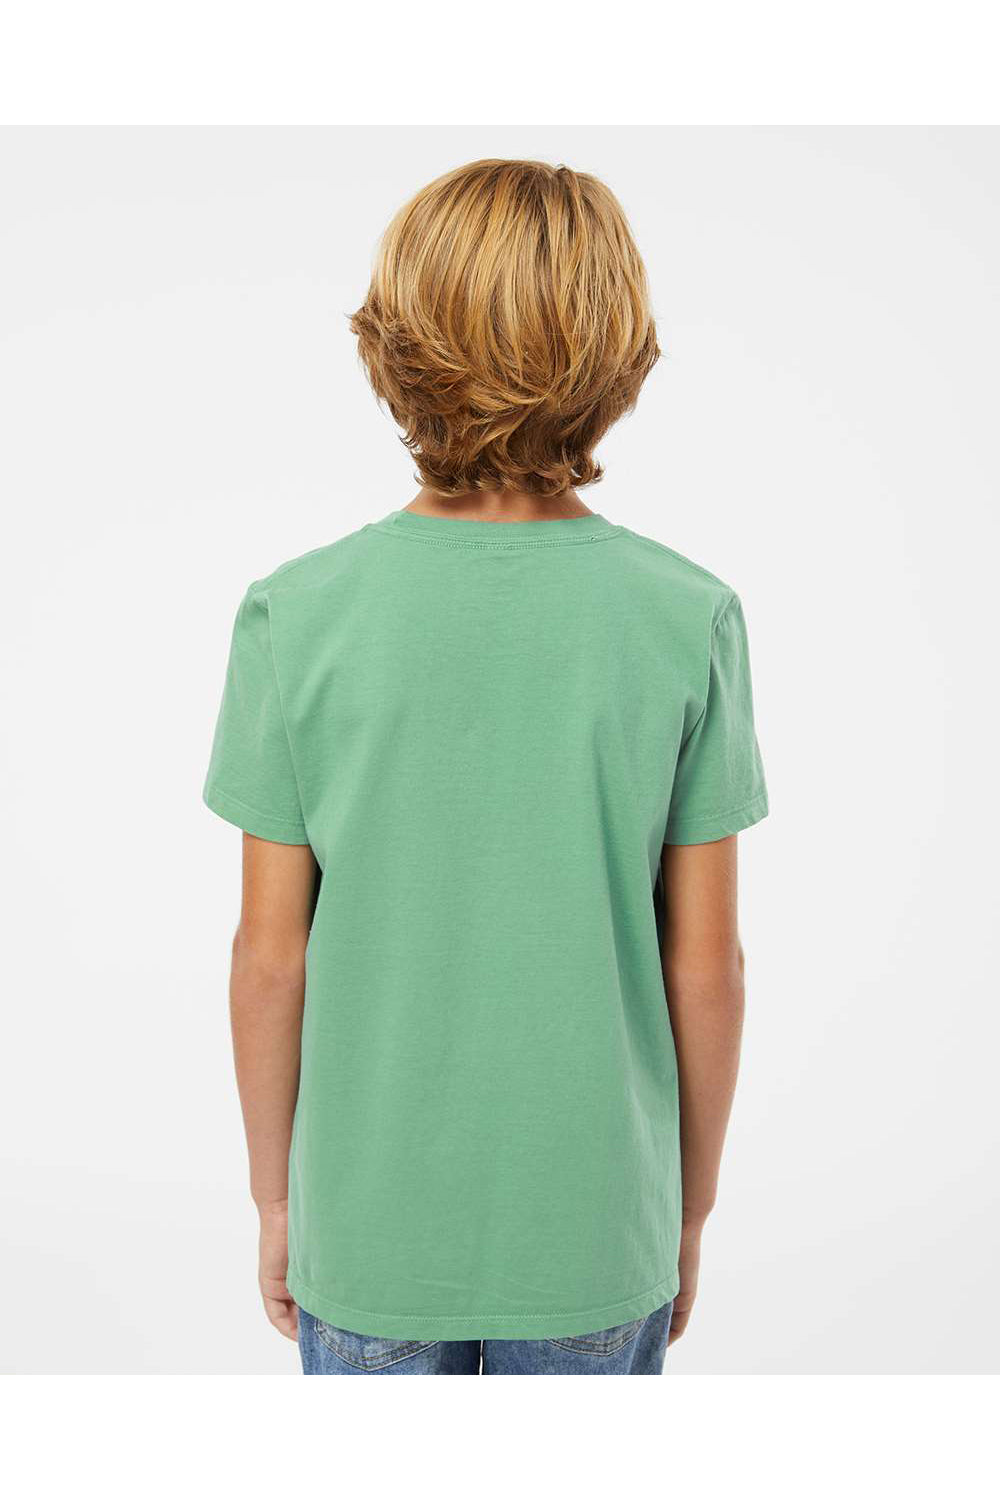 SoftShirts 402 Youth Organic Short Sleeve Crewneck T-Shirt Pine Green Model Back